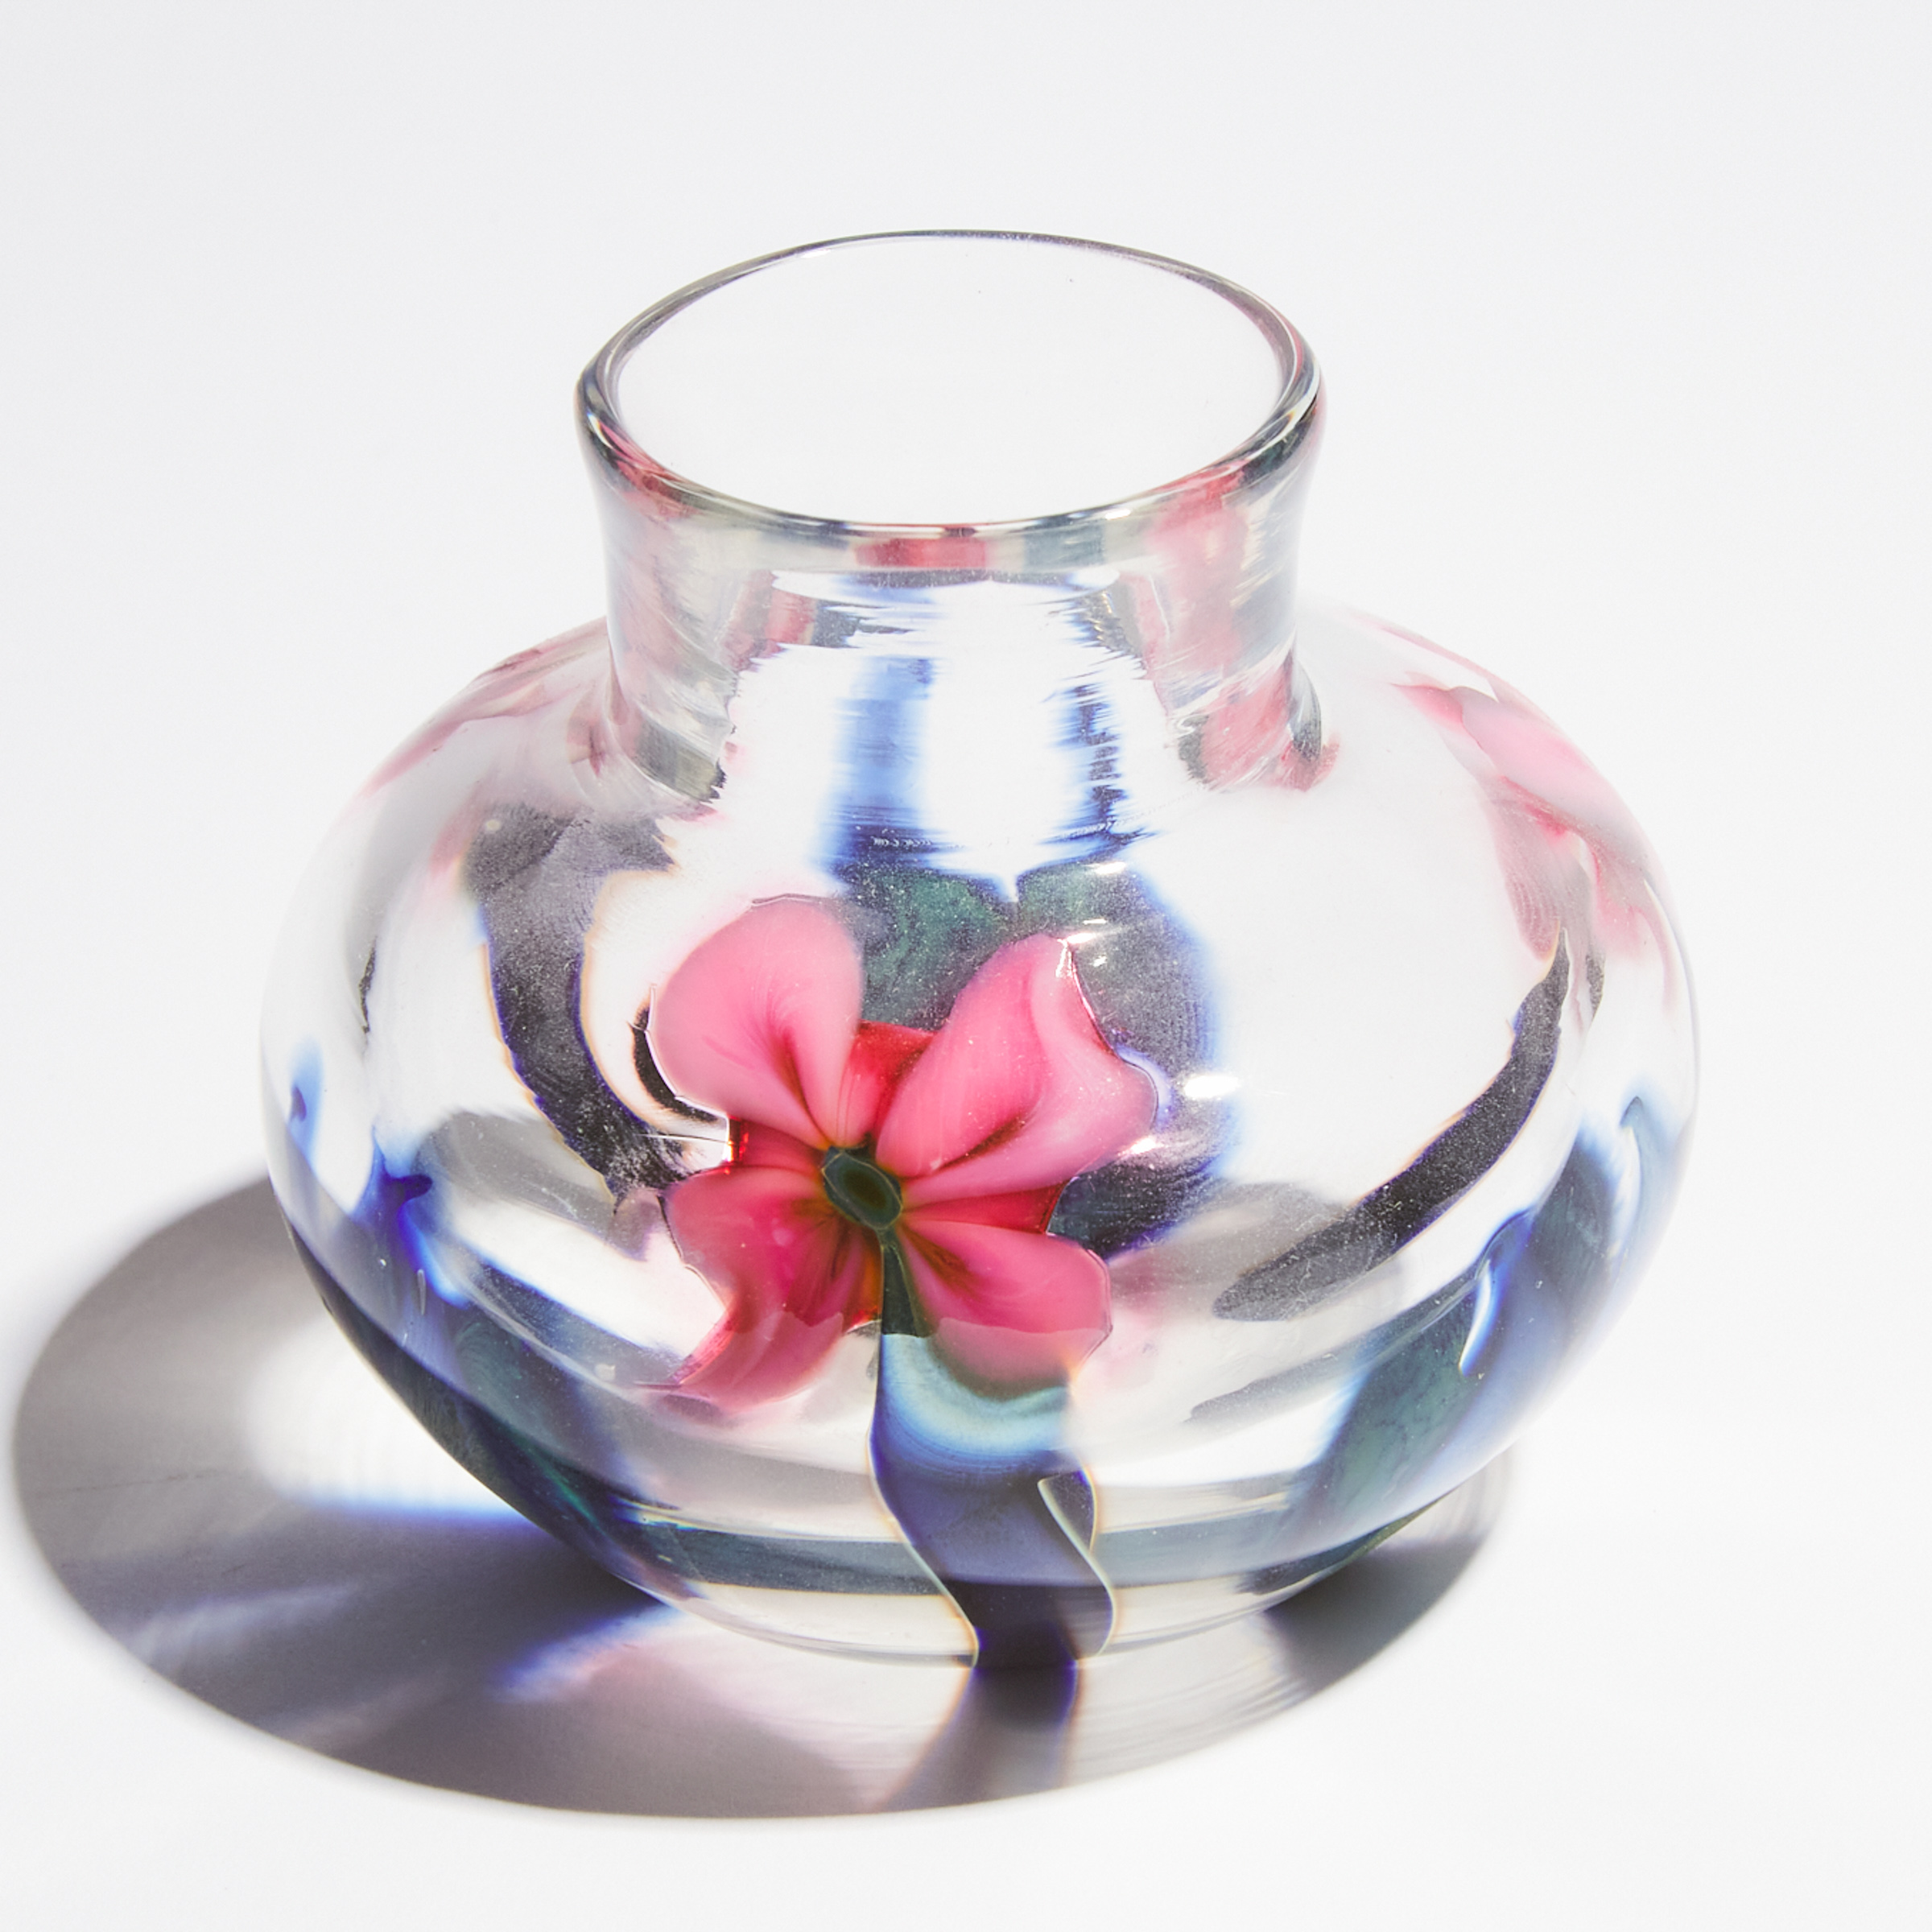 Charles Lotton (American, 1935-2021), 'Multi Flora' Small Glass Vase, 2013